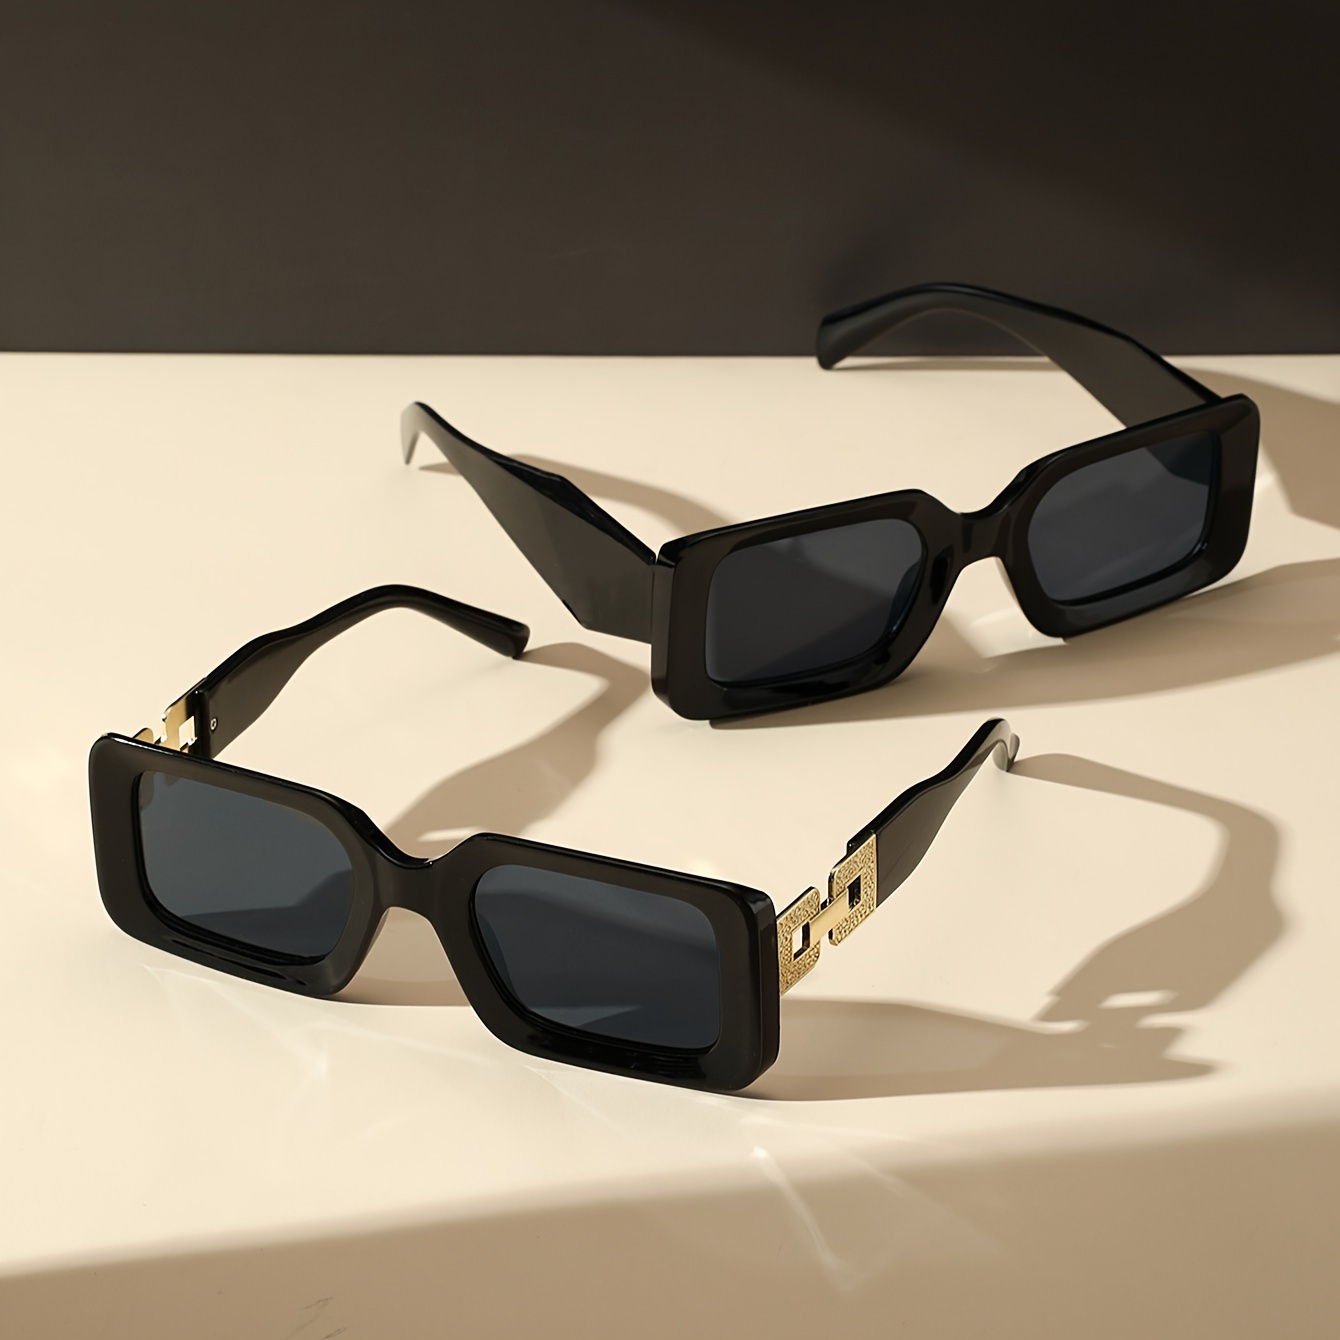 

2pcs Rectangle Fashion Glasses For Women Men Hollow Hinge Anti Glare Sun Shades Glasses For Driving Beach Travel